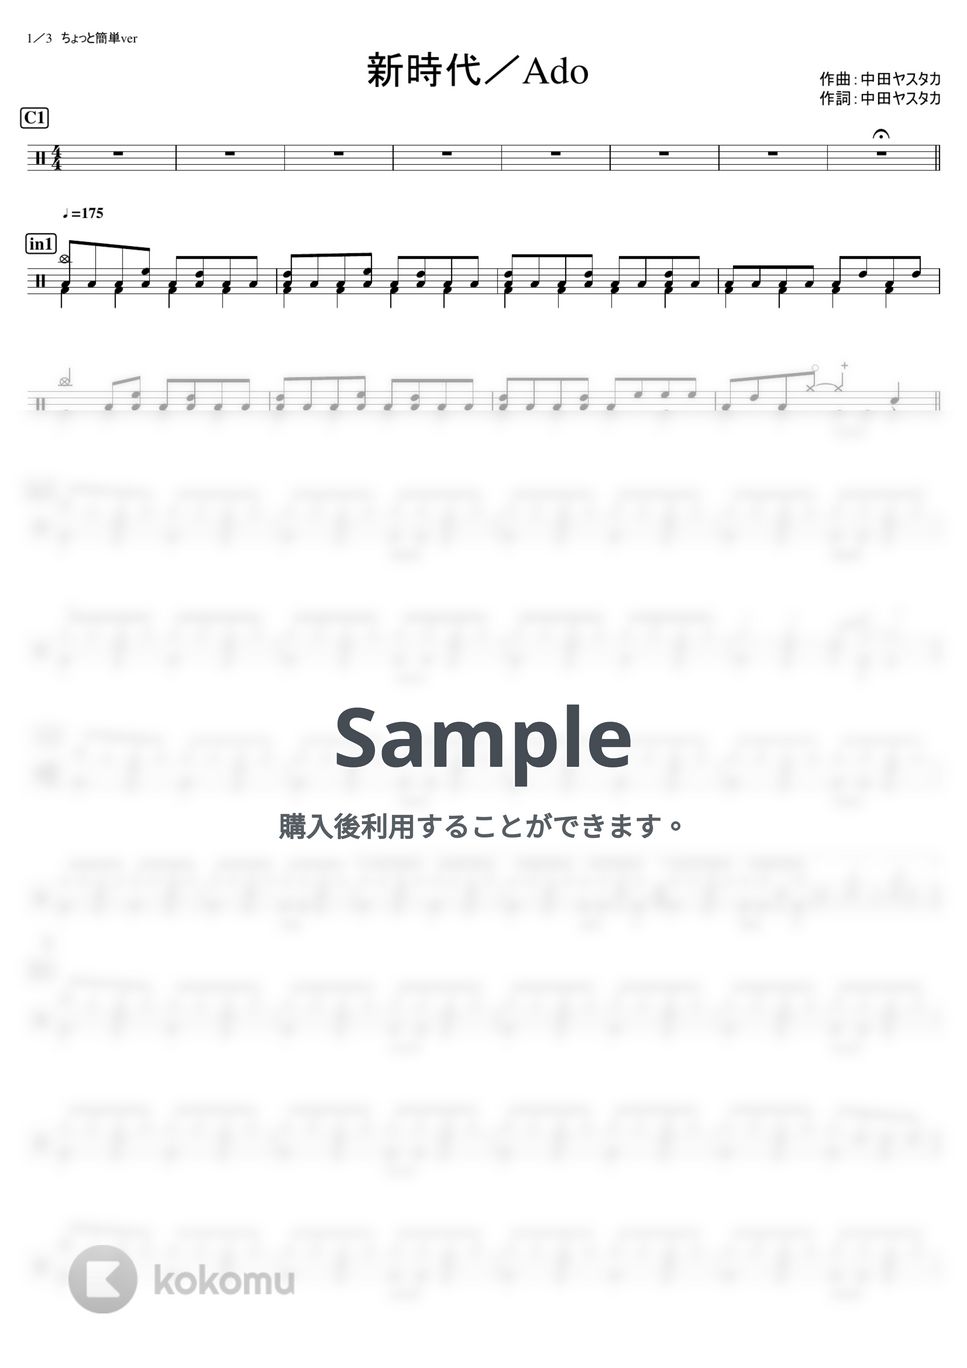 Ado (ウタfrom ONE PIECE) - 新時代 (中級) by kamishinjo-drum-school